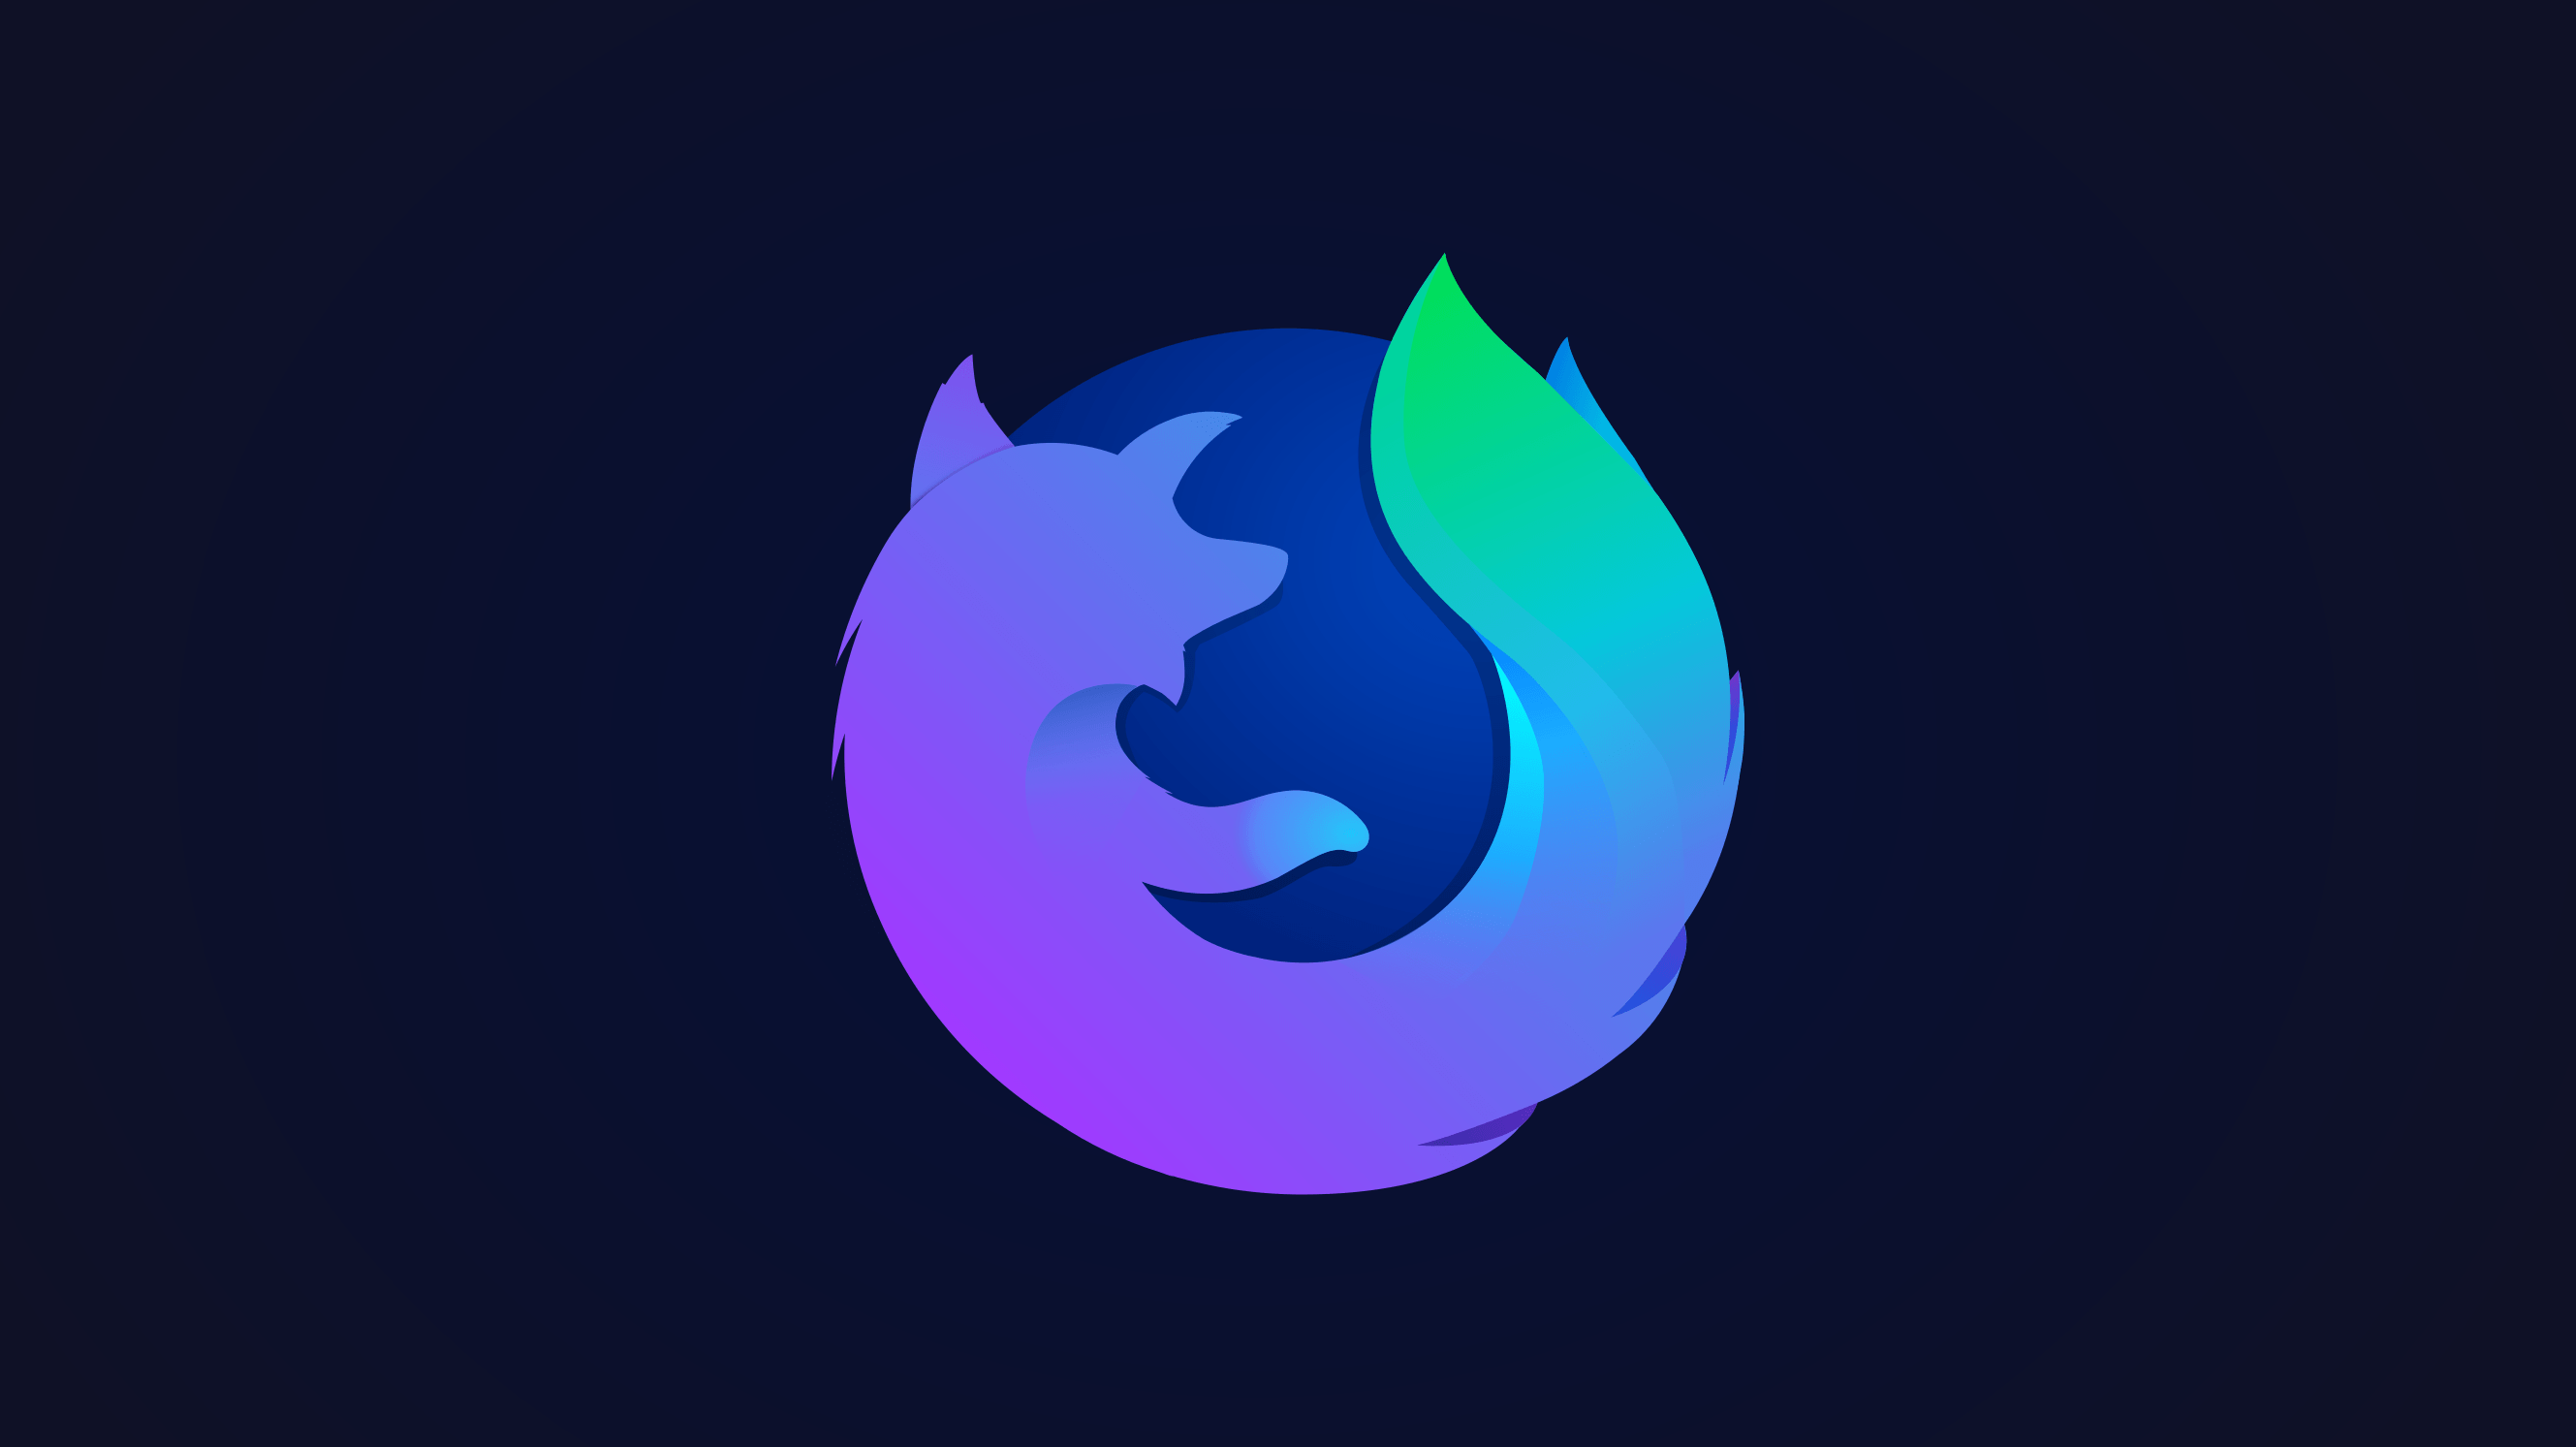 Cool Firefox Logo - 2560x1440] Firefox Nightly Logo (Slight Variation) : wallpaper